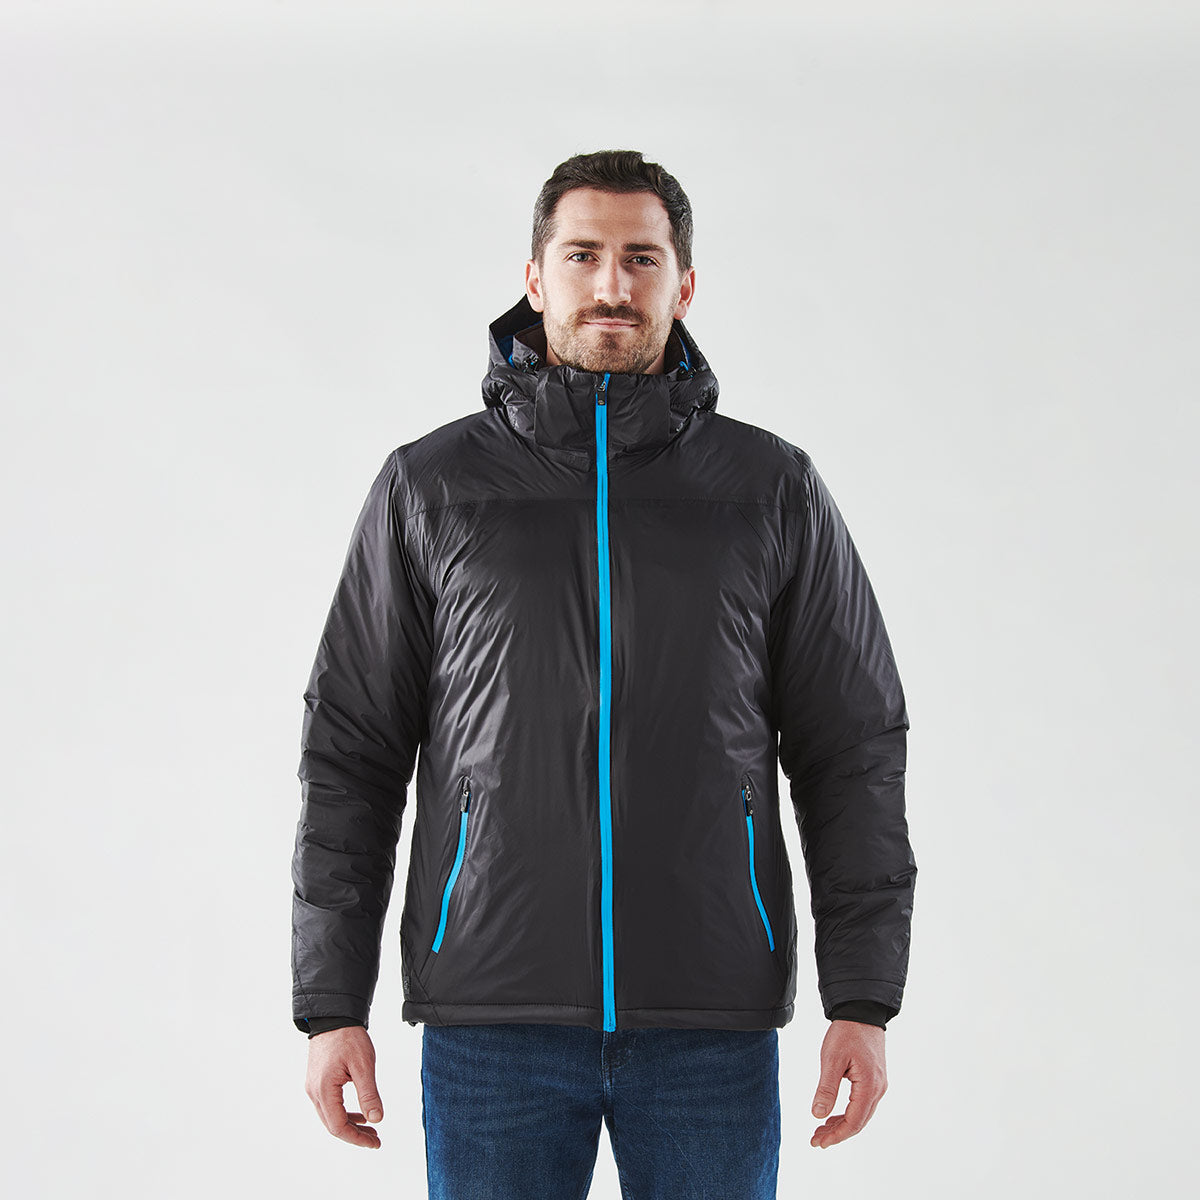 jug Styrke mistet hjerte Men's Black Ice Thermal Jacket - Stormtech USA Retail